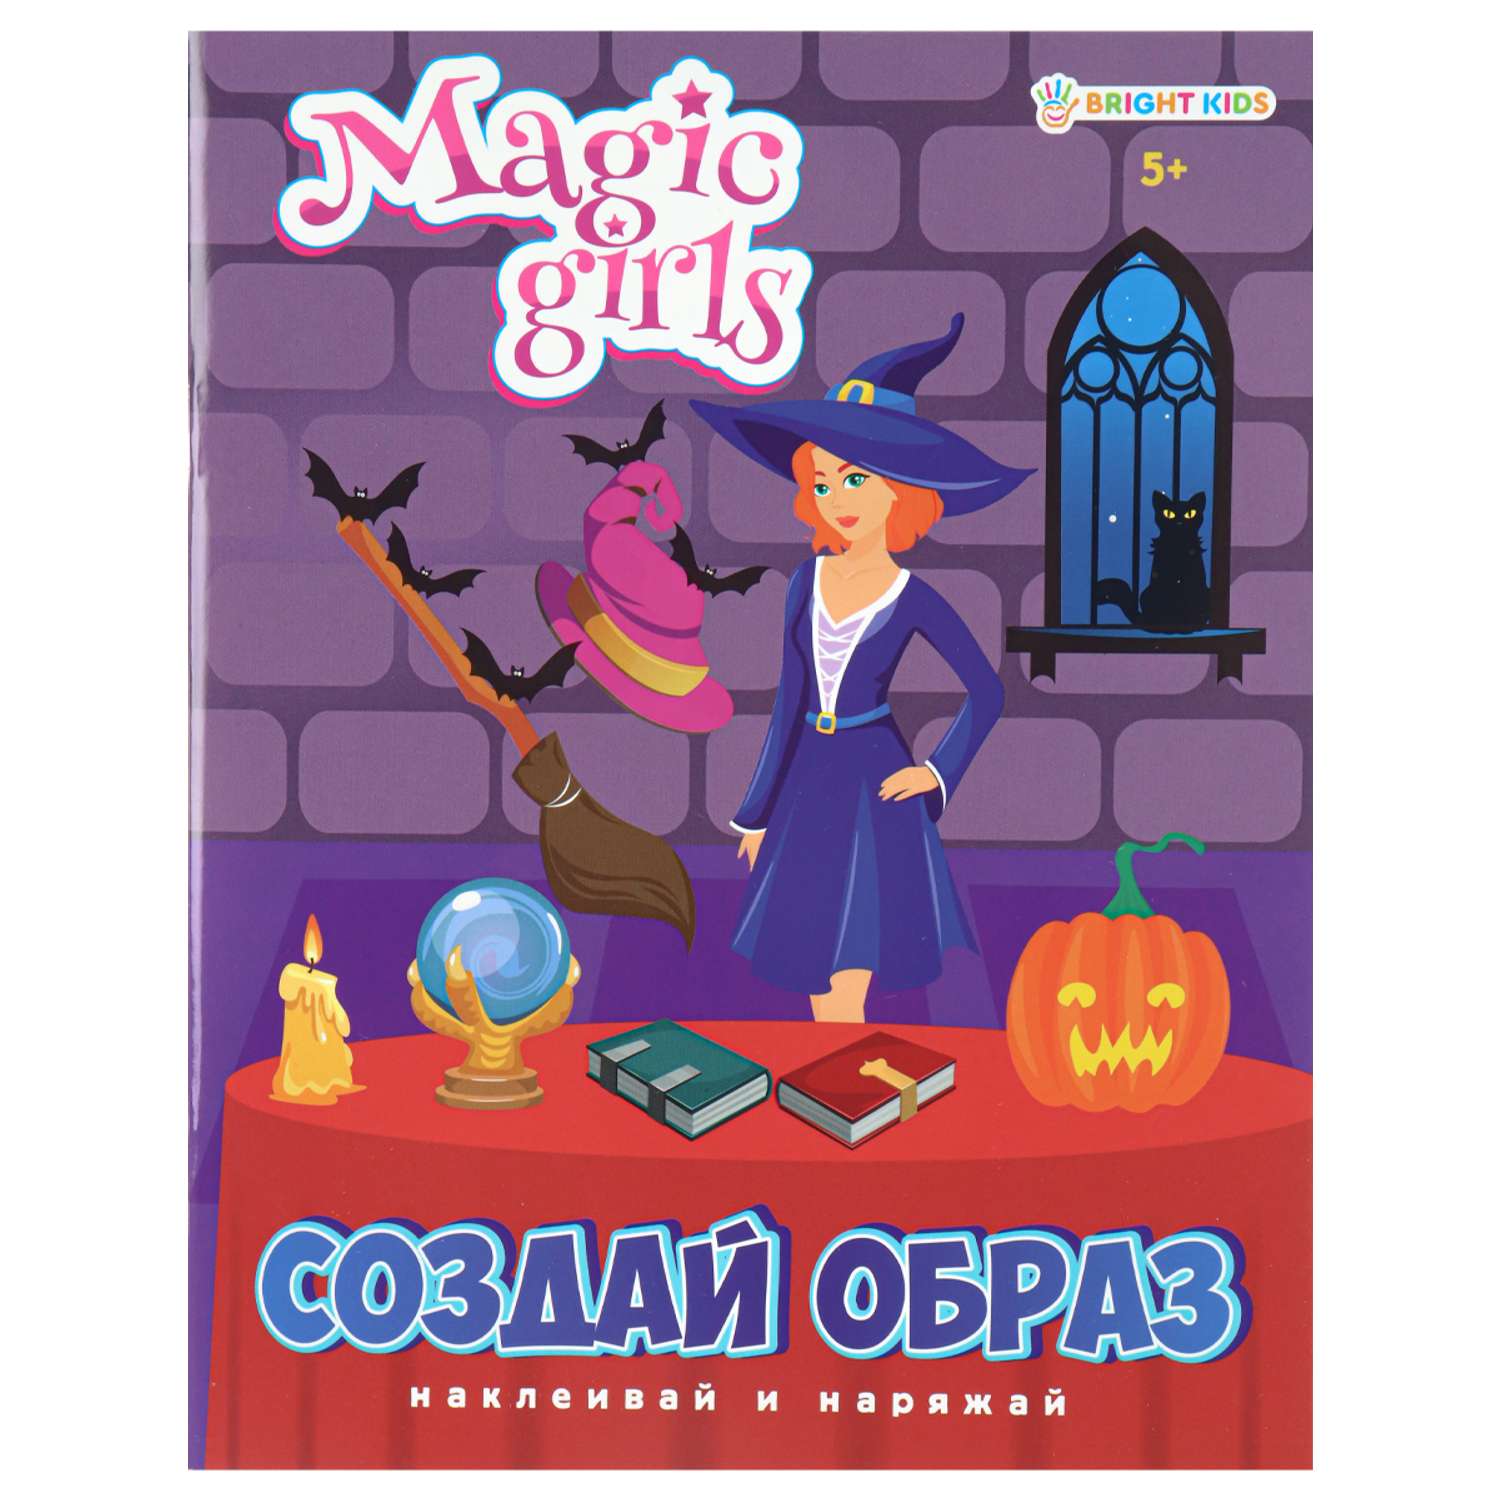 Развивающая брошюра Bright Kids с наклейками Magik gerls А5 4 листа - фото 1